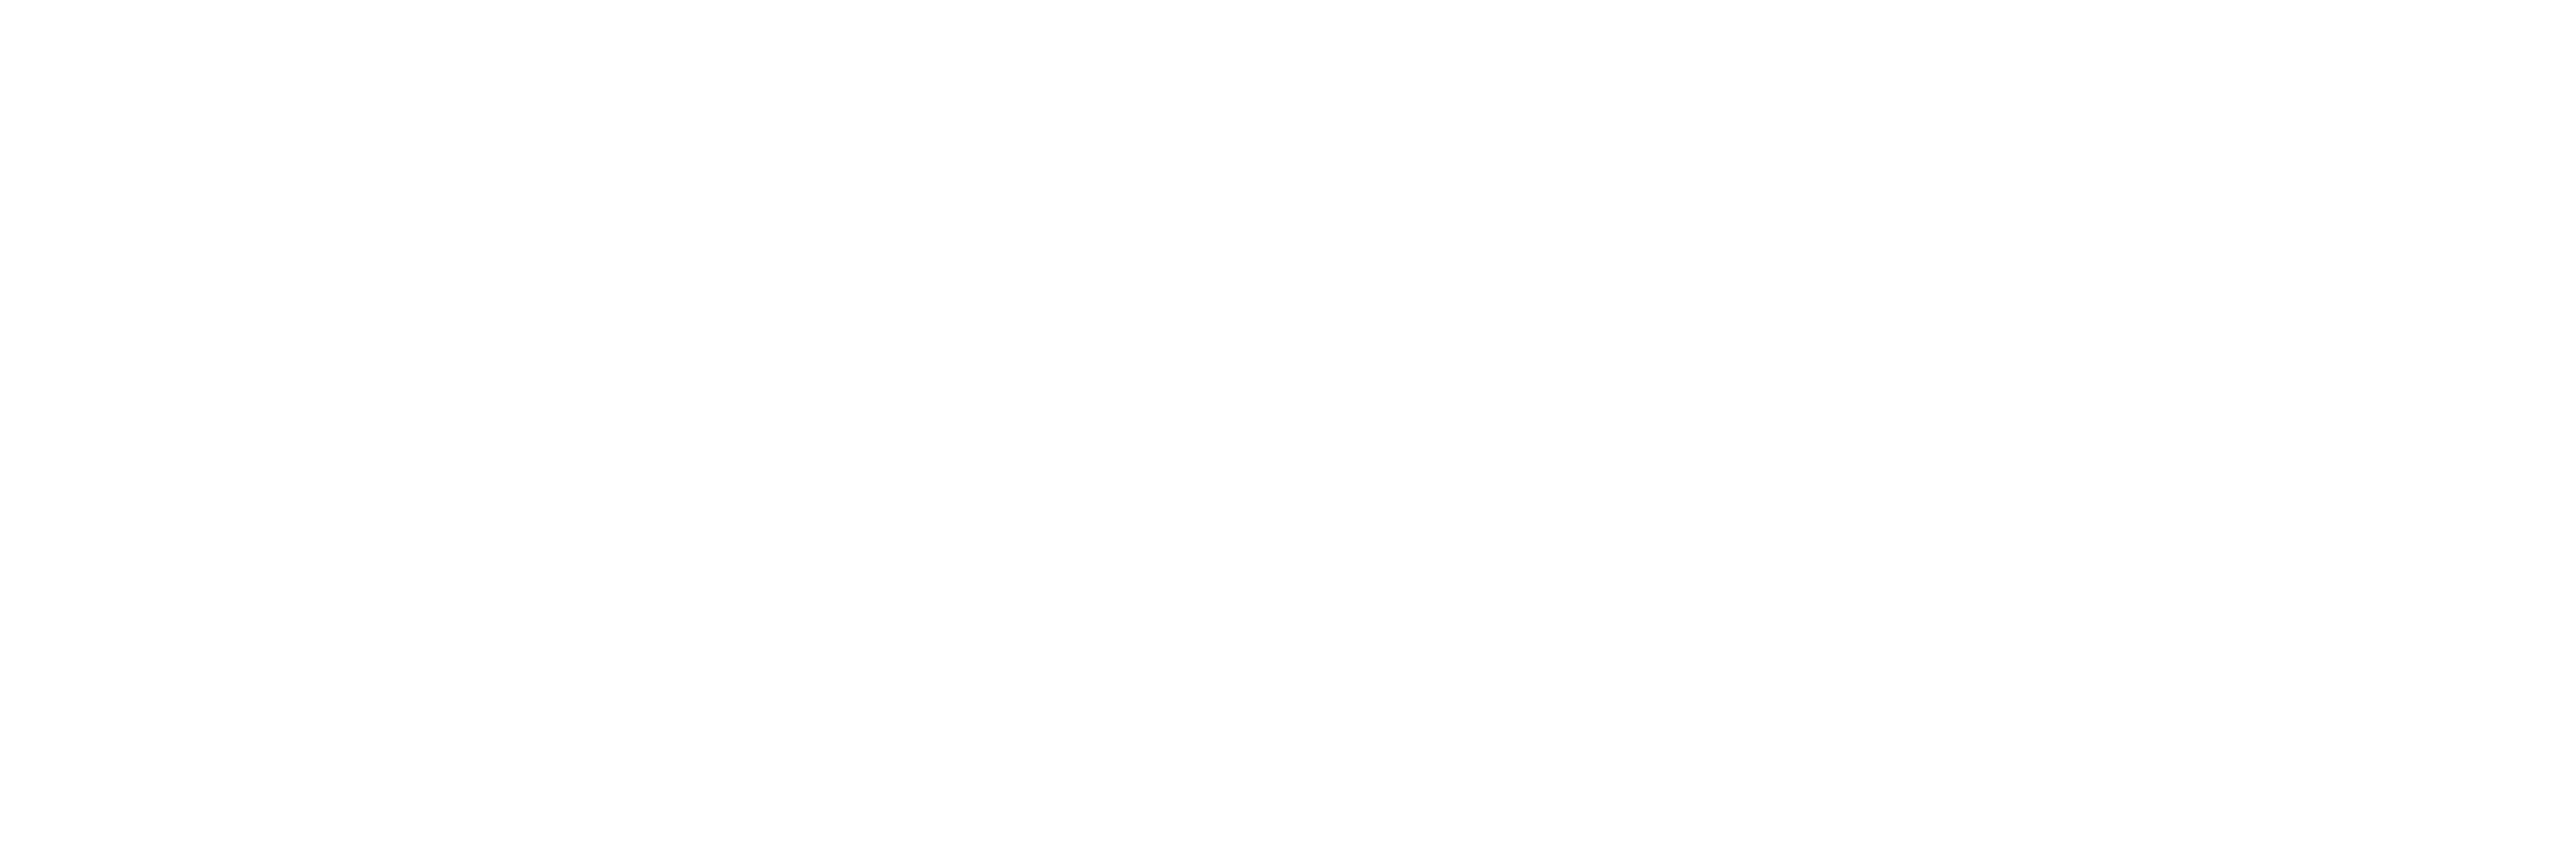 AniCura Abros Hospital Veterinario logo